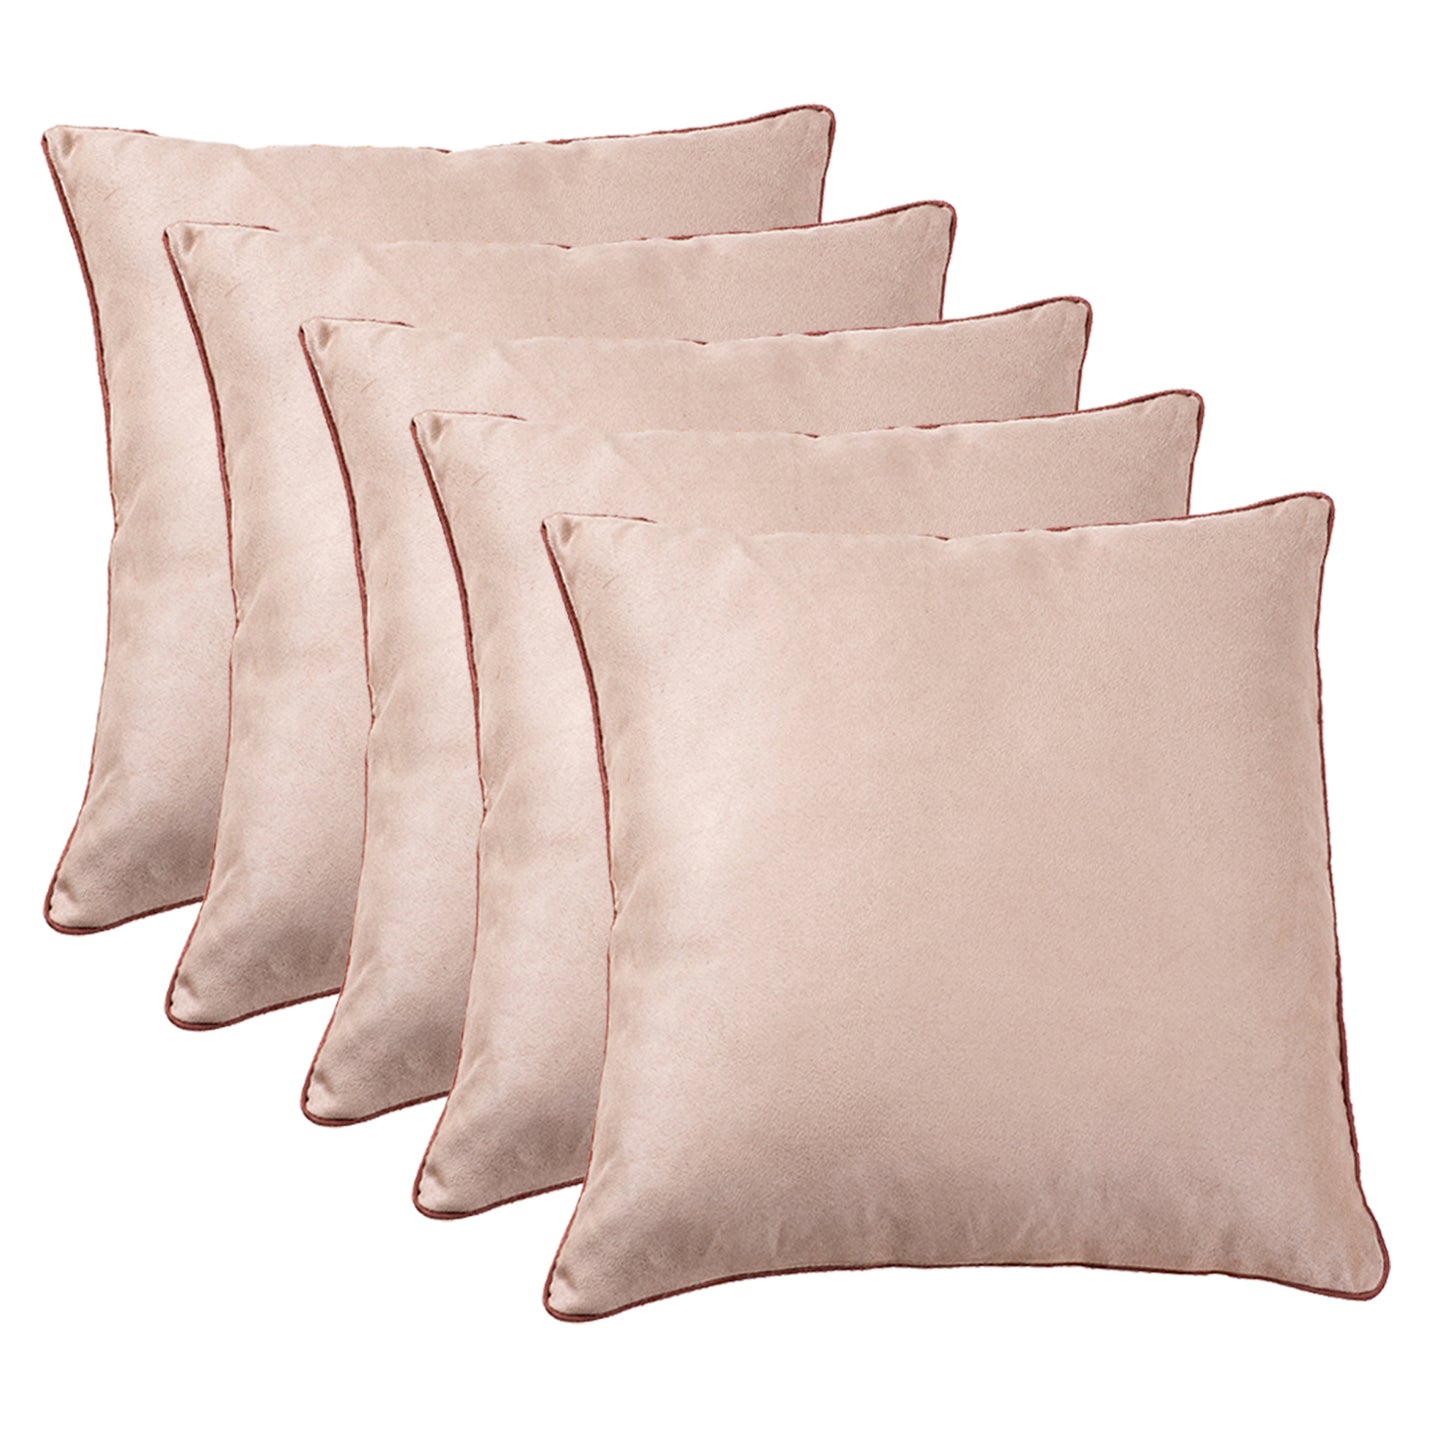 Lush Velvet Cushion Cover Beige 12 X 12 Inches Set of 5